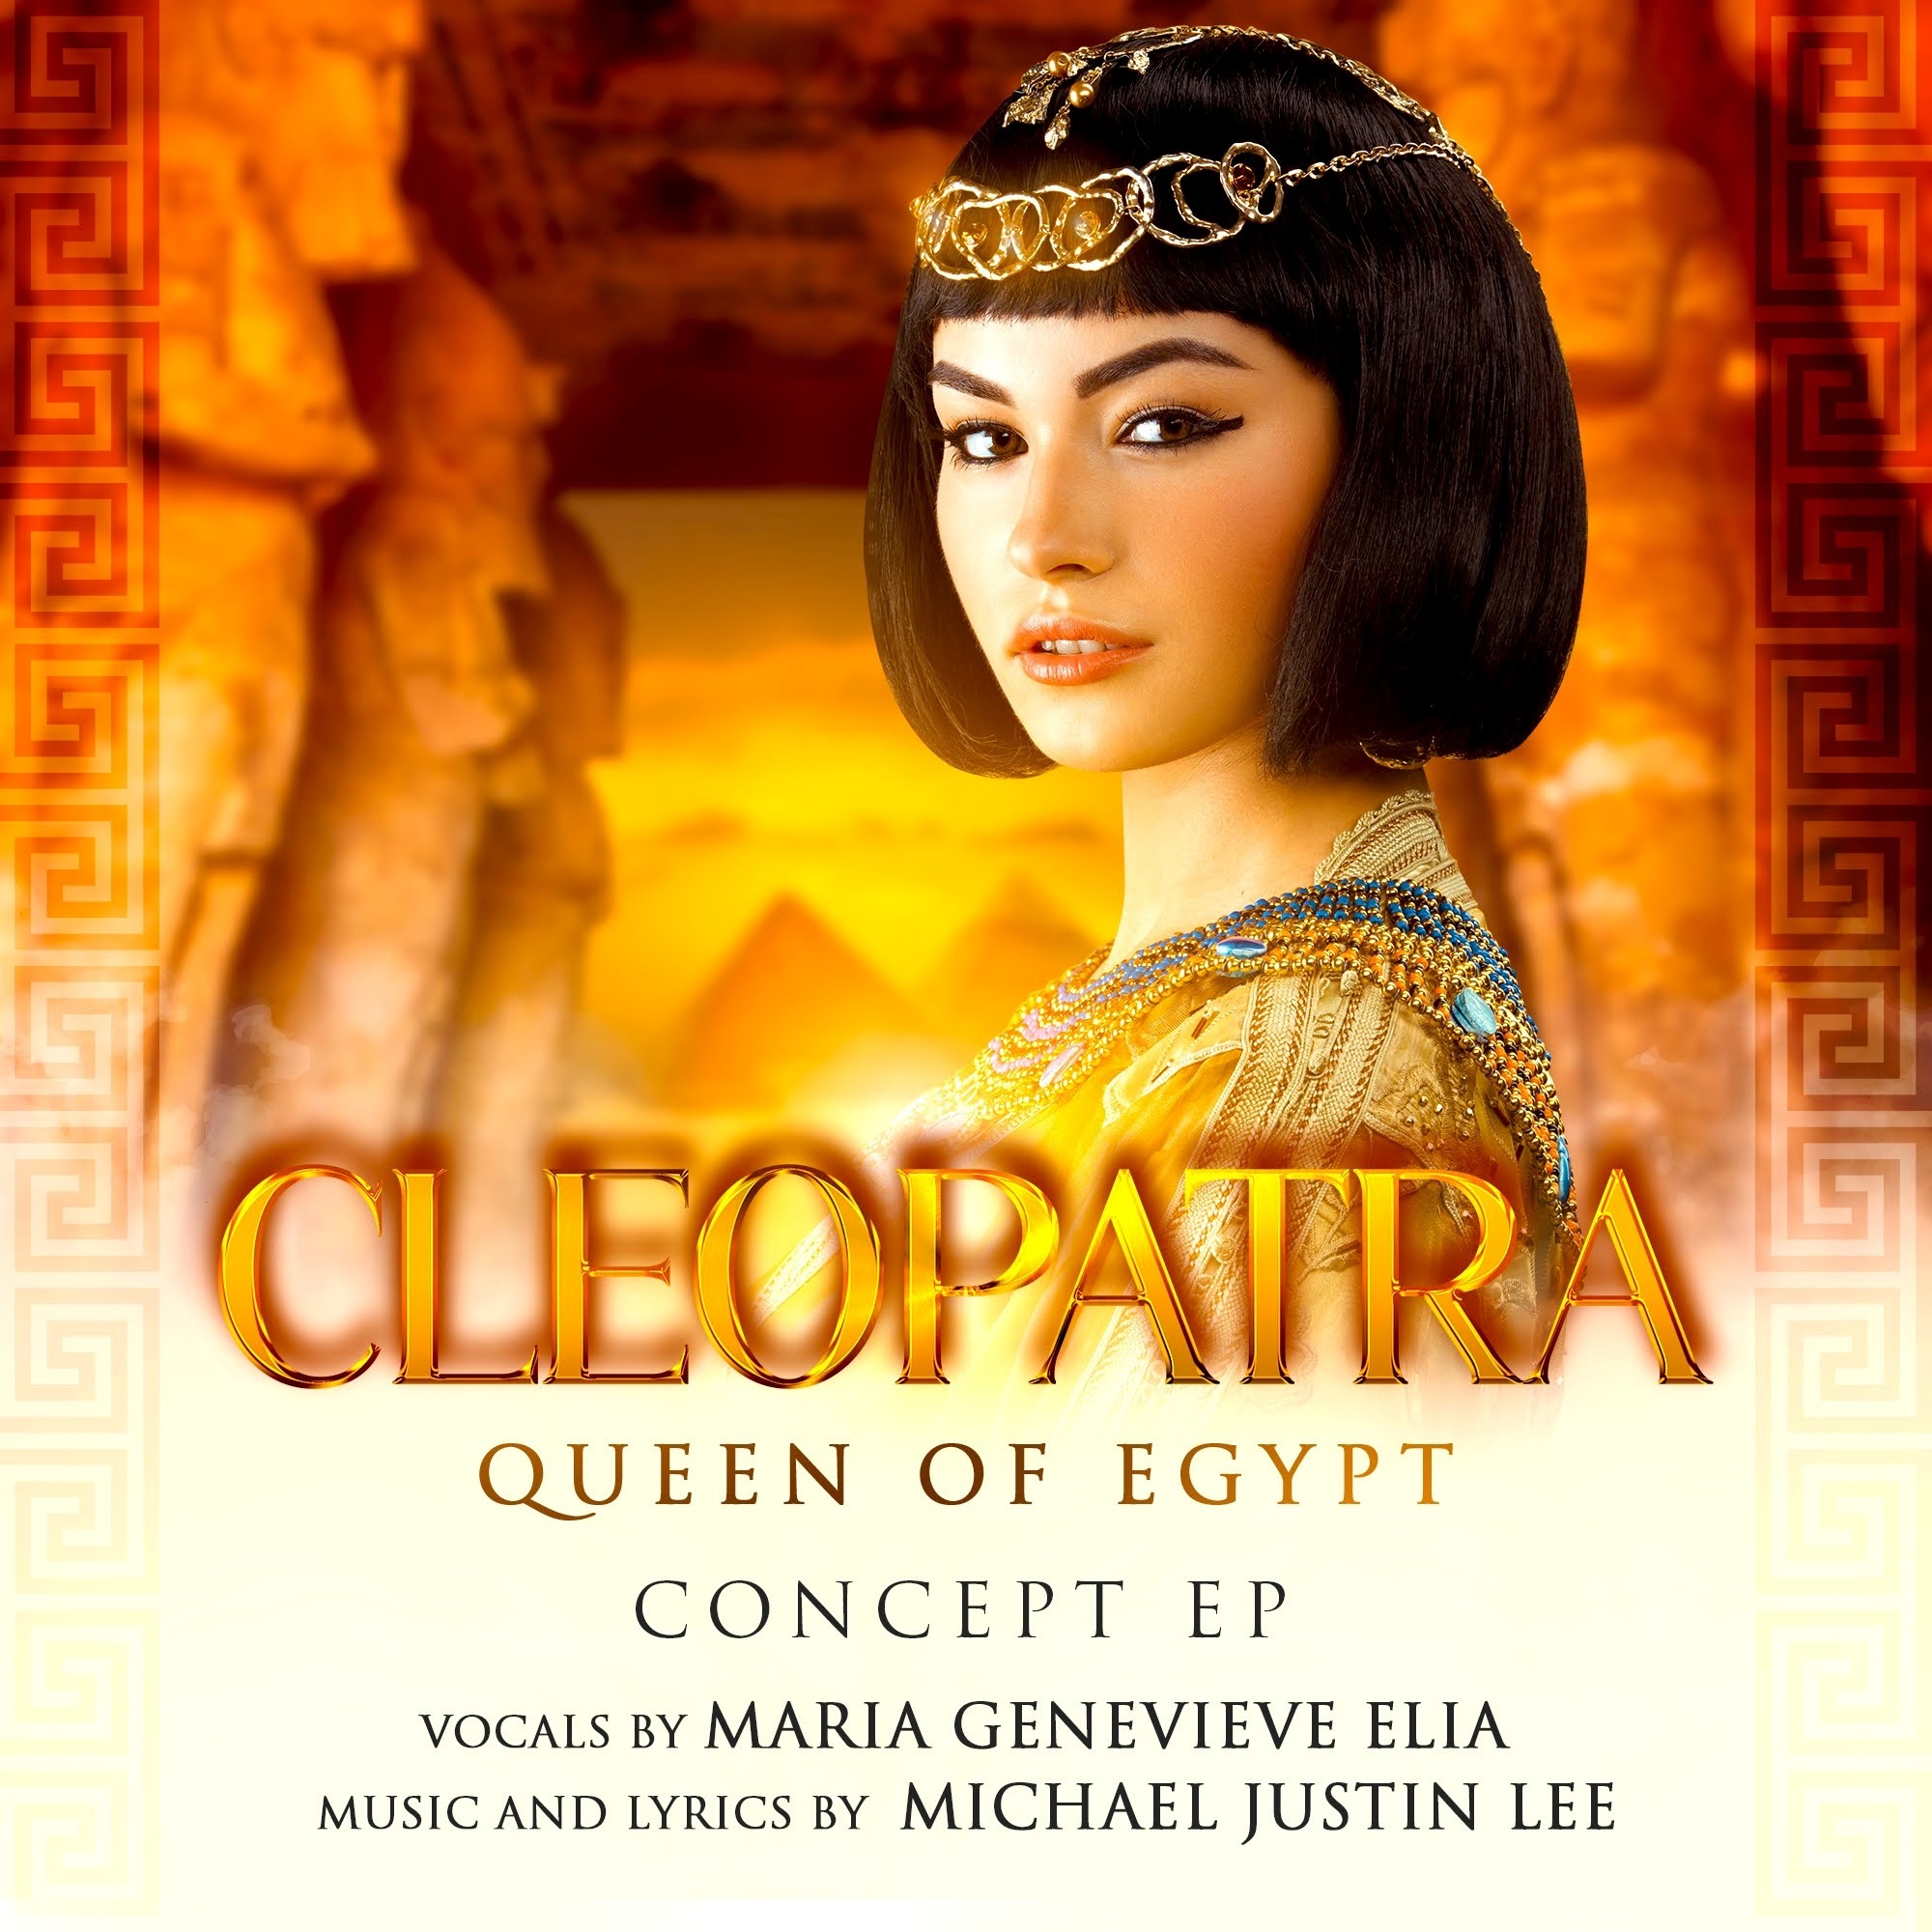 Cleopatra comes to life in Solemn Pledge’s brilliant Rock Opera concept album, "Cleopatra: Queen of Egypt"